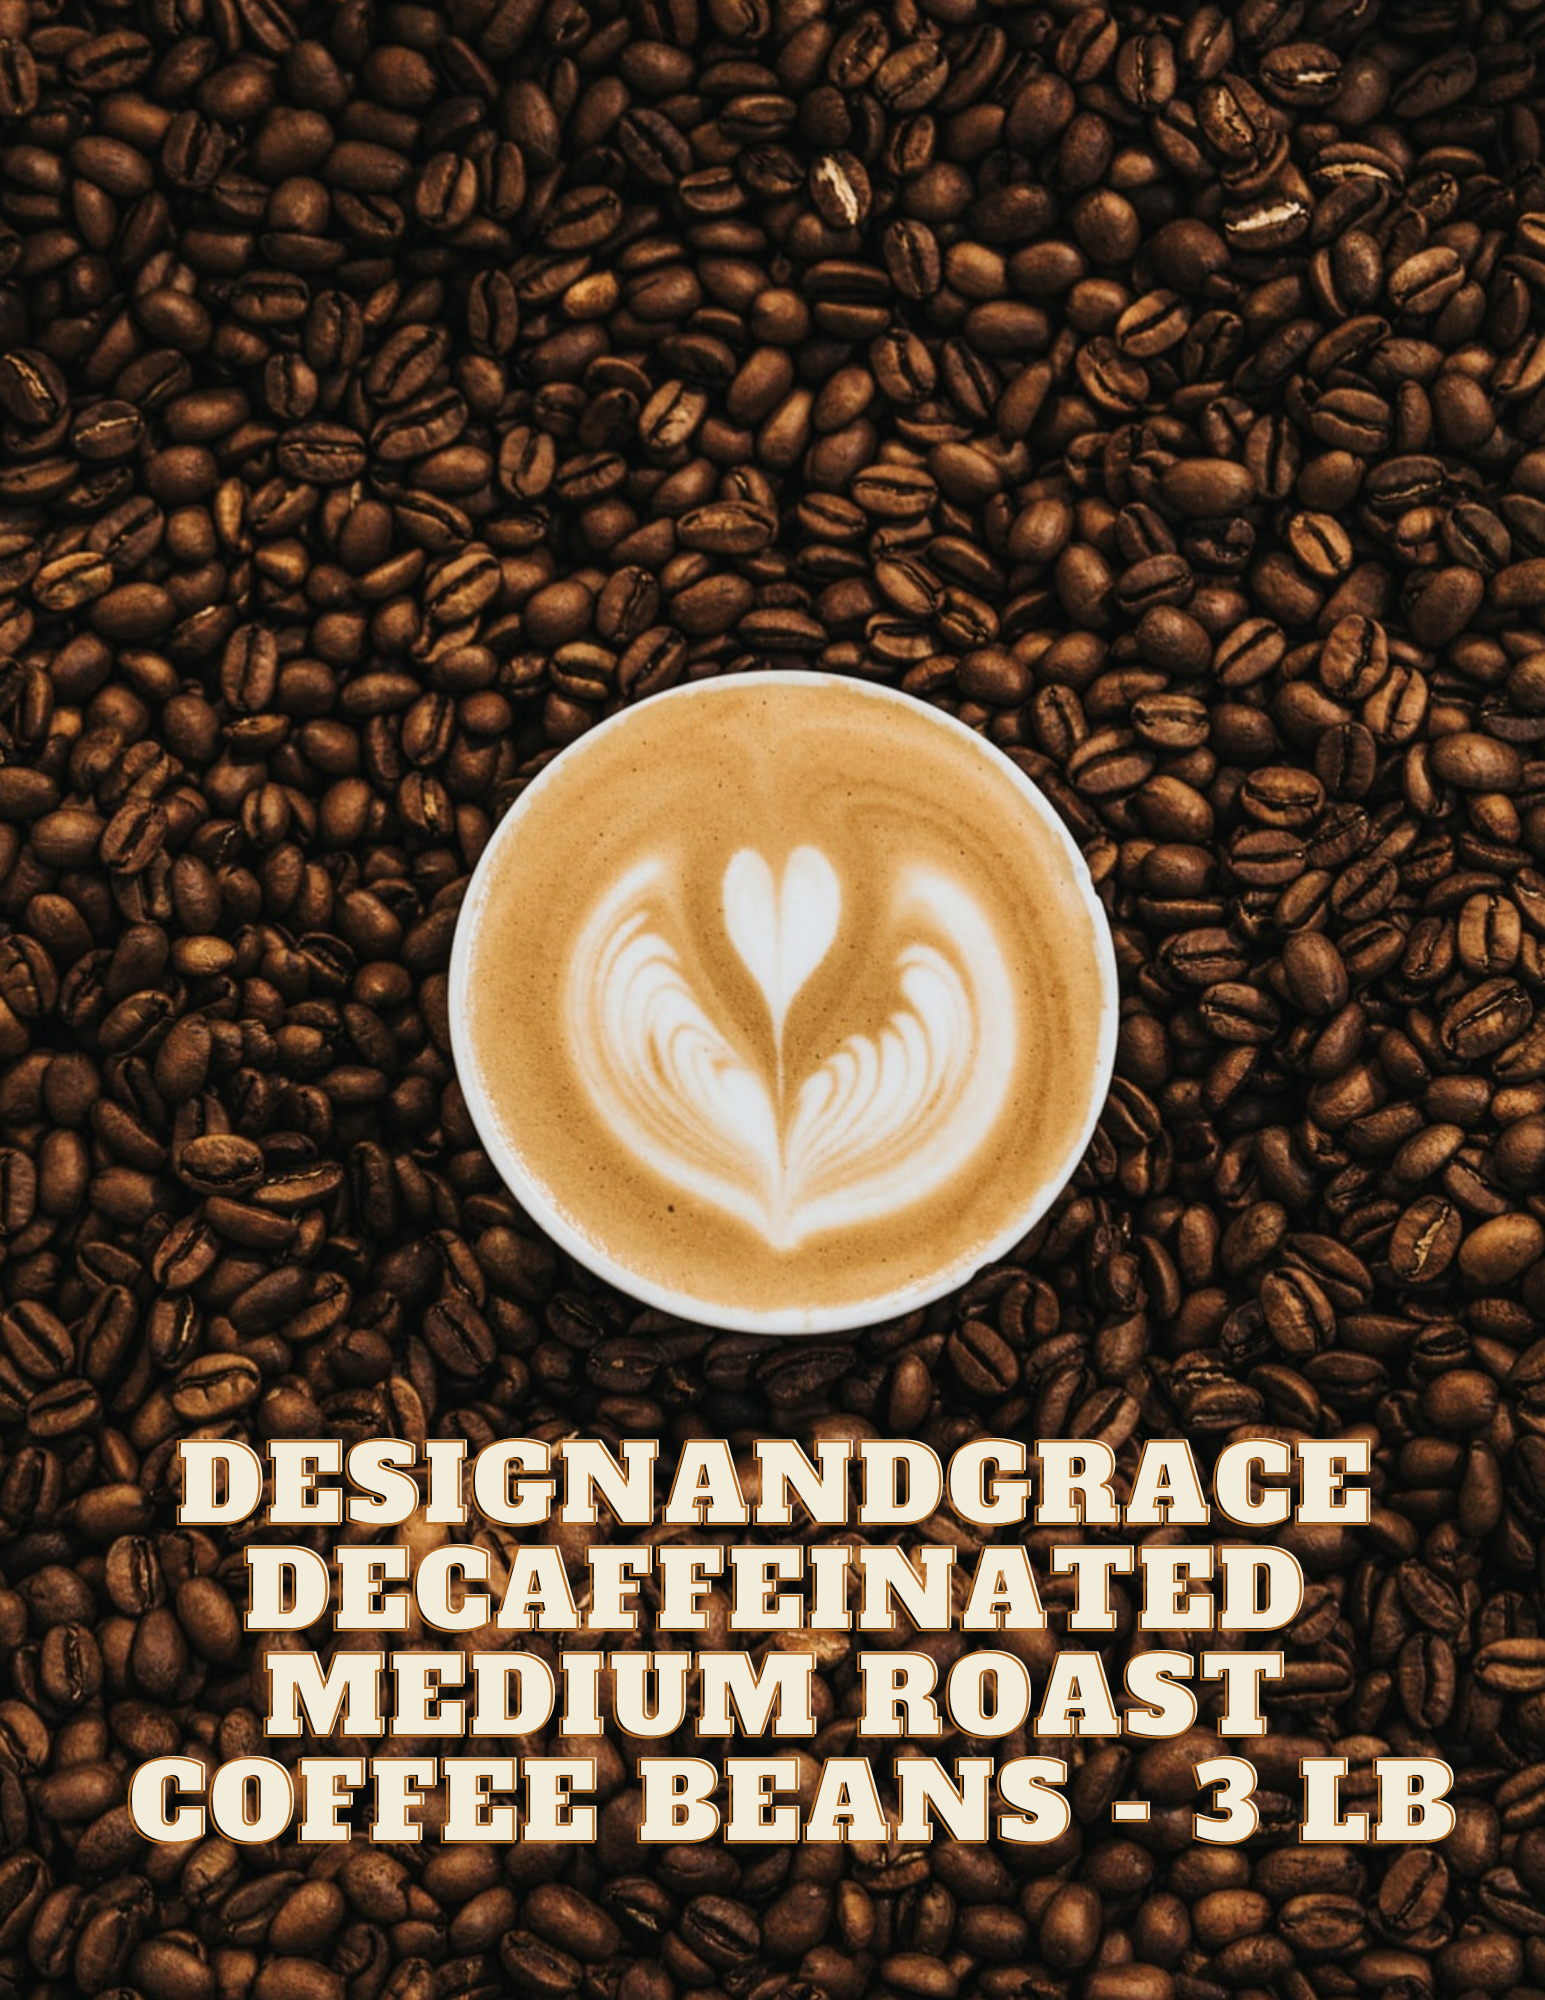 DesignandGrace Decaffeinated Medium Roast Coffee Beans - 3 lb